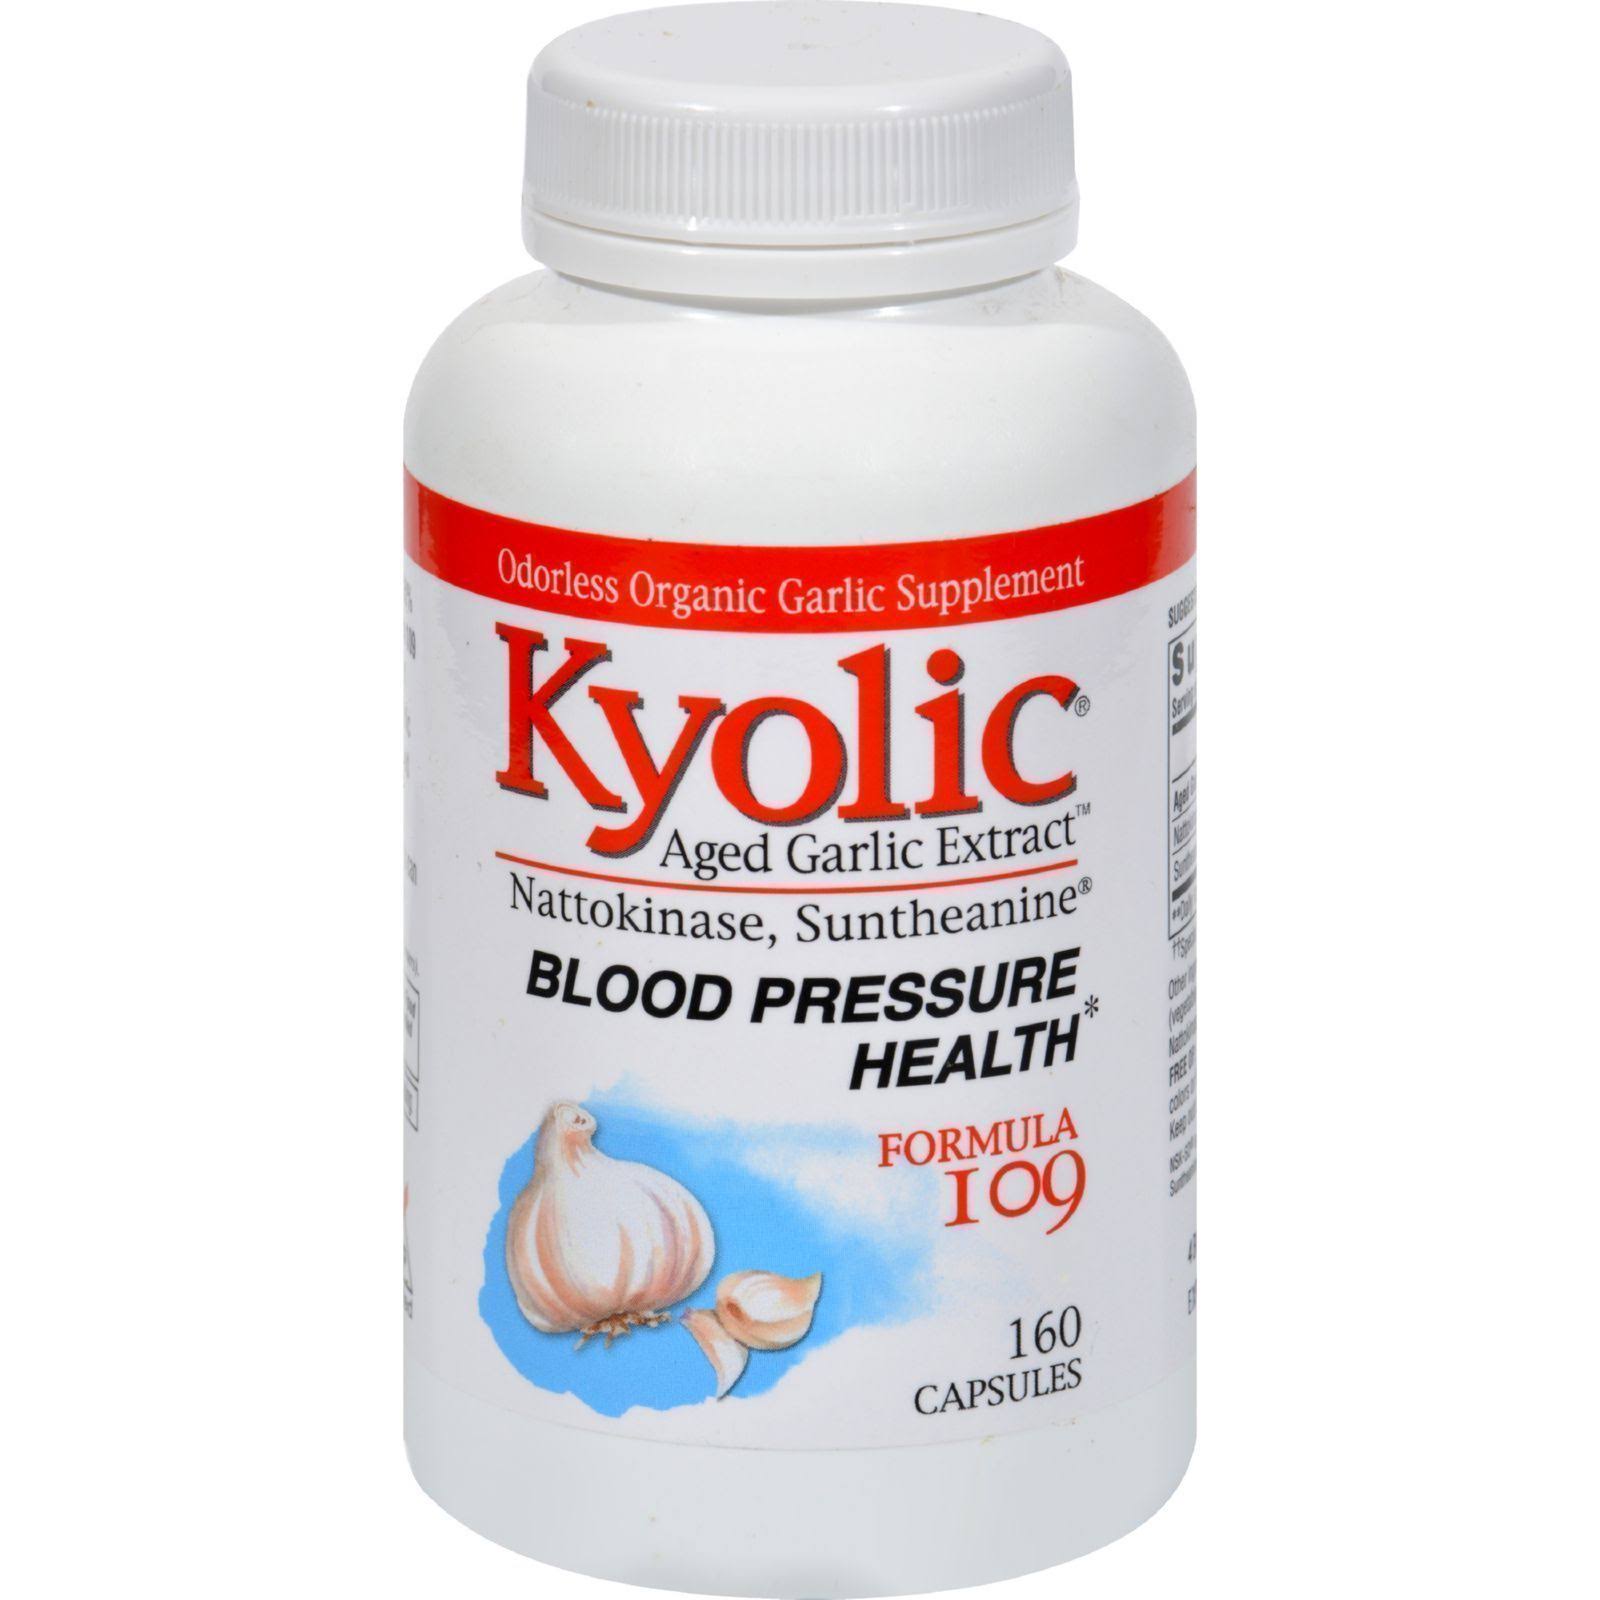 Kyolic Formula 109 Aged Garlic Extract Supplement - 160 Capsules